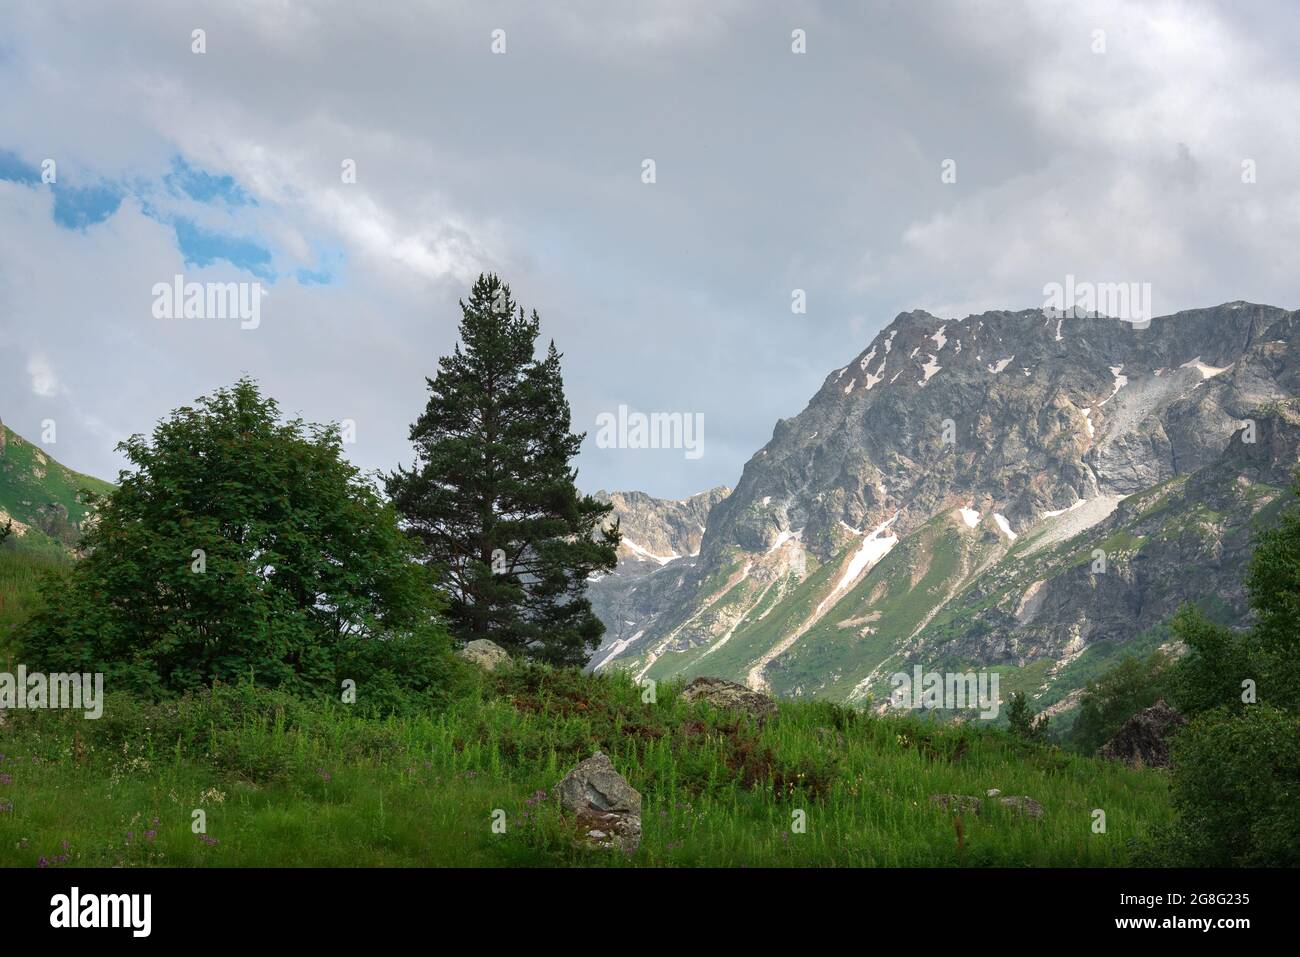 A beautiful alpine gorge of the Ullu-Murudzhu River with green meadows and mountain peaks in the Karachay-Cherkess Republic Stock Photo